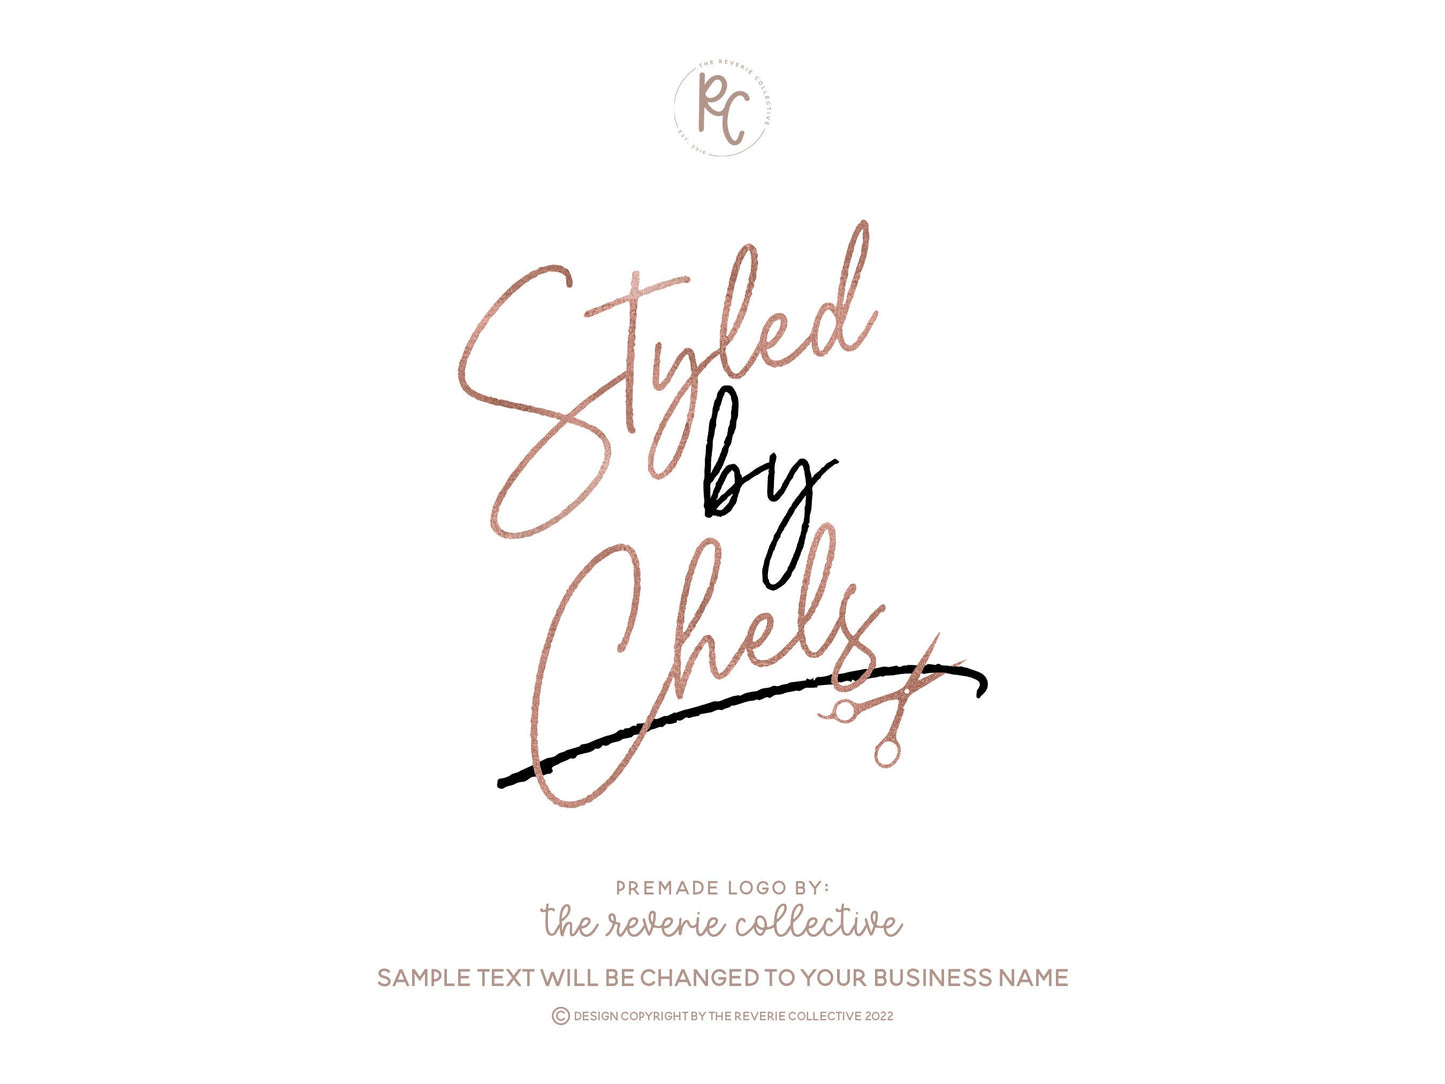 Styled By Chels | Premade Logo Design | Hairstylist, Scissors, Beauty, Hair Salon